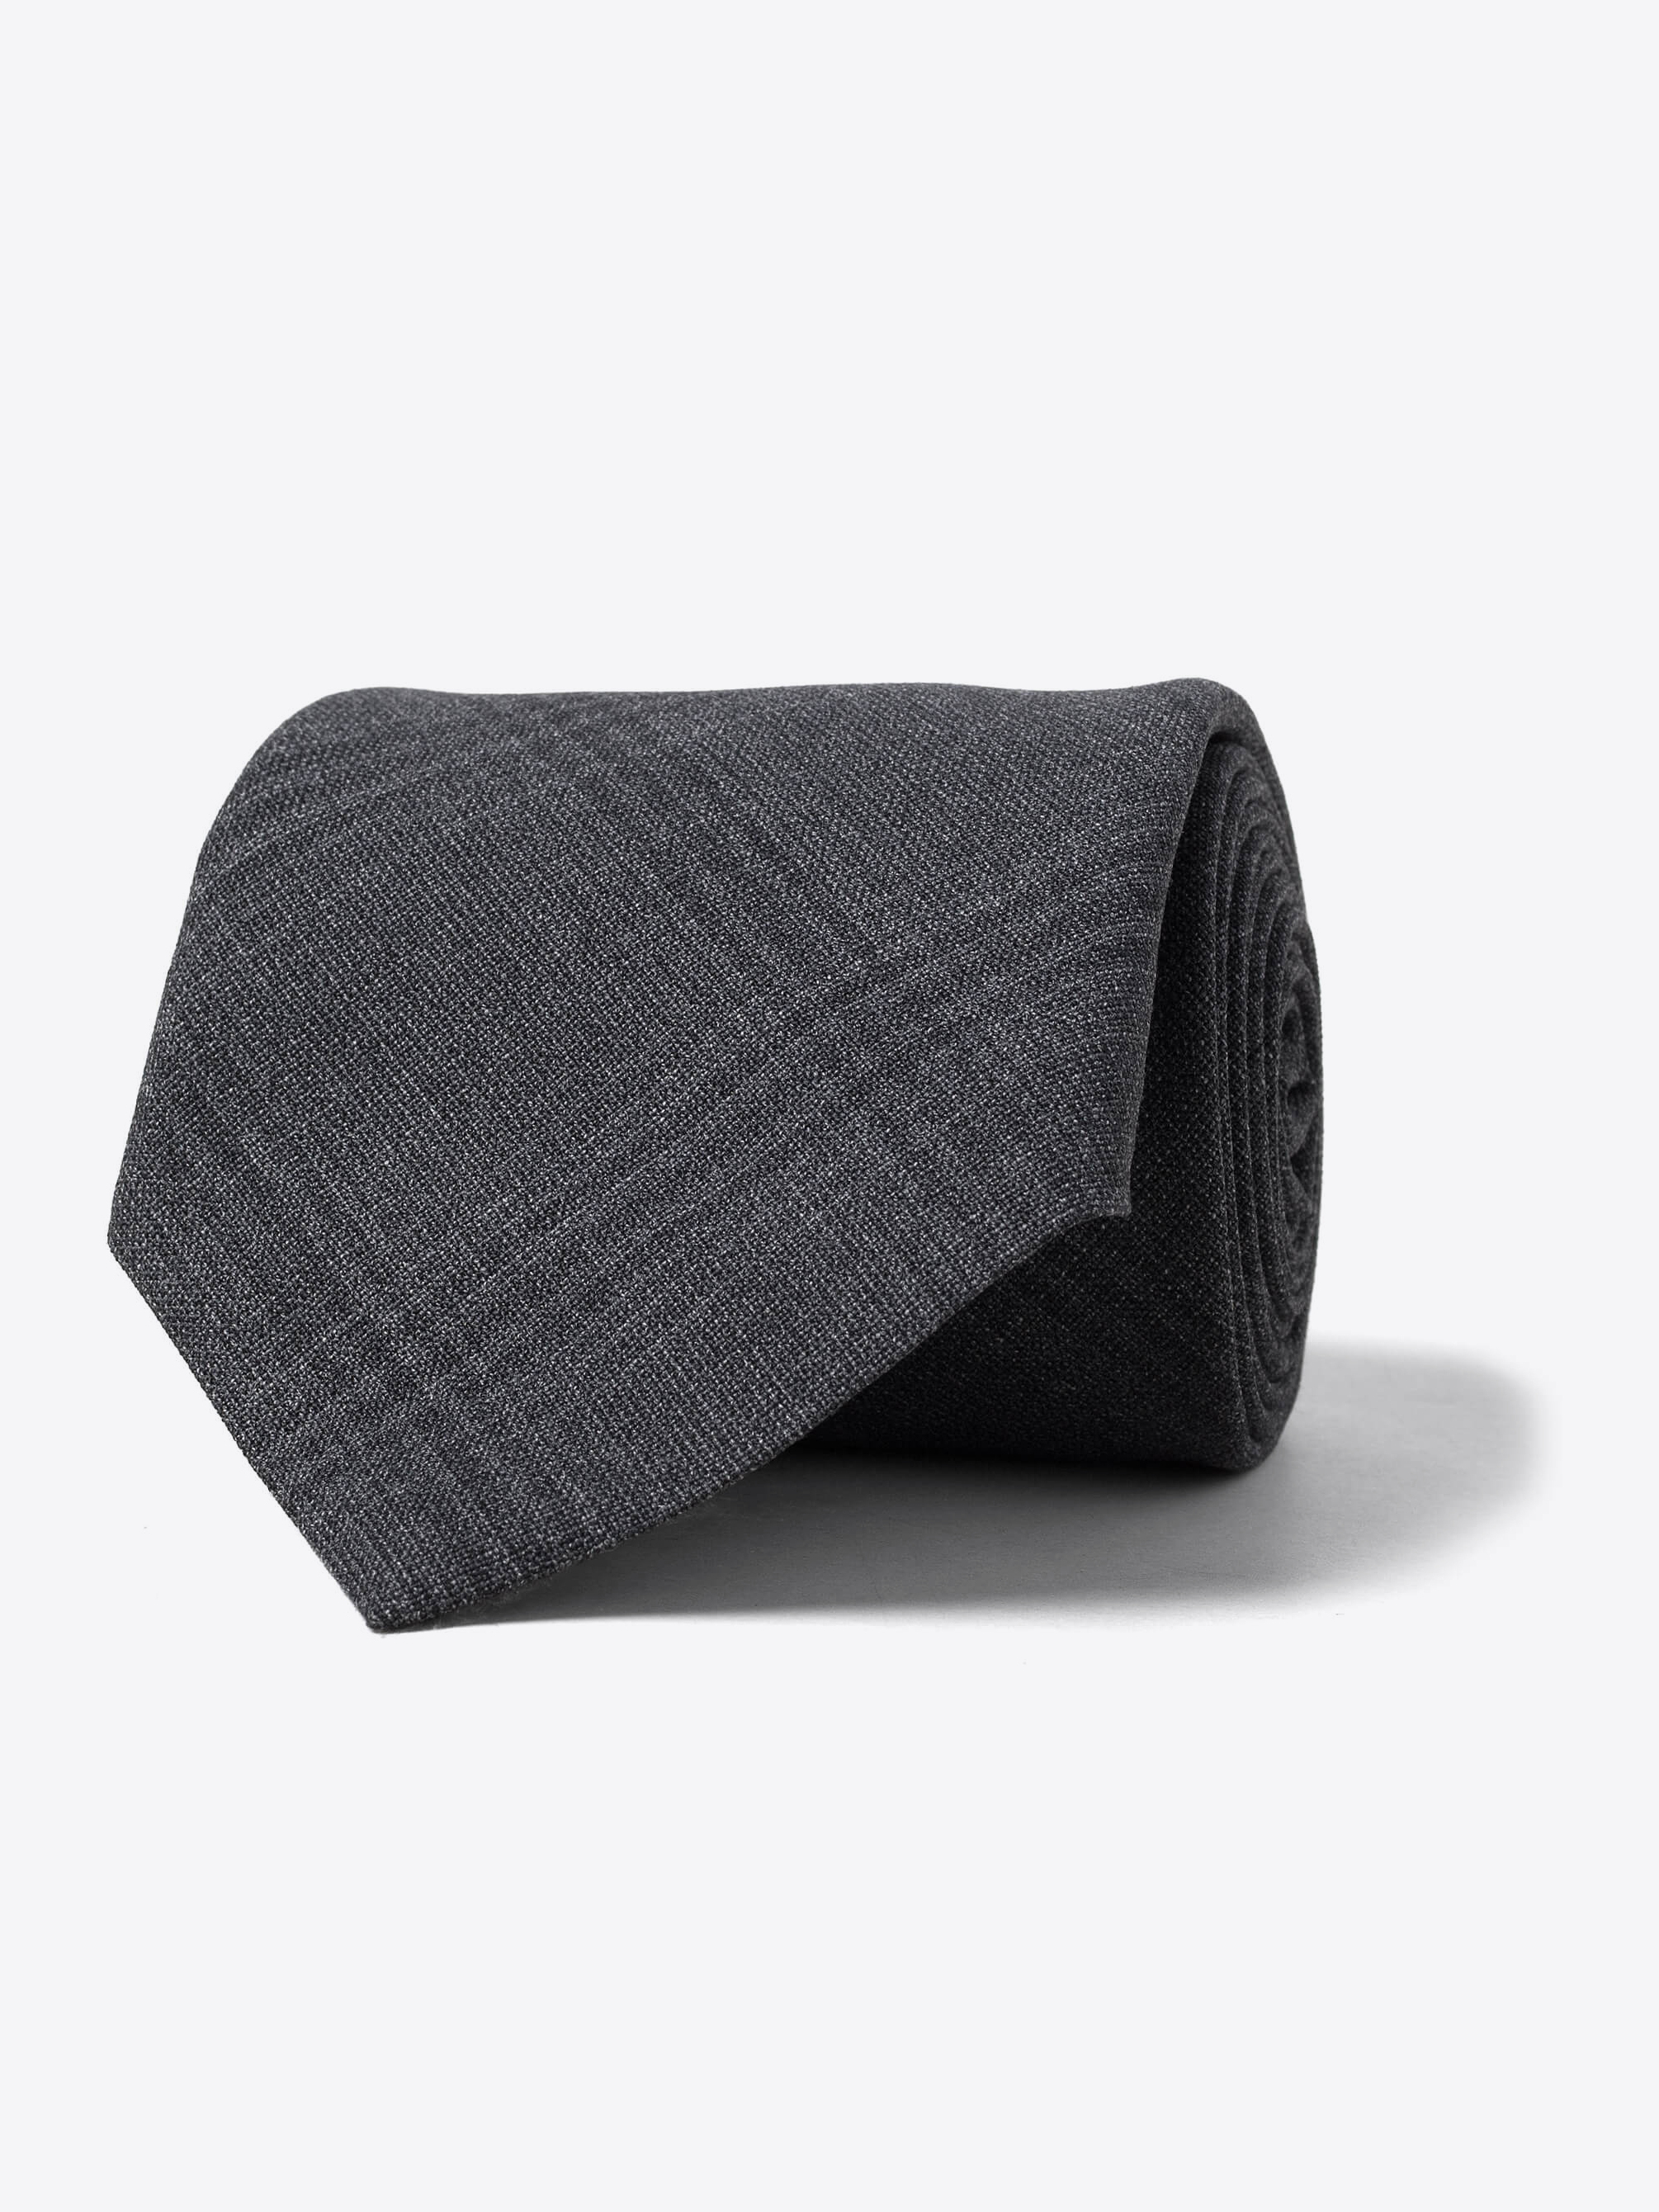 Zoom Image of Charcoal Plaid Wool Tie